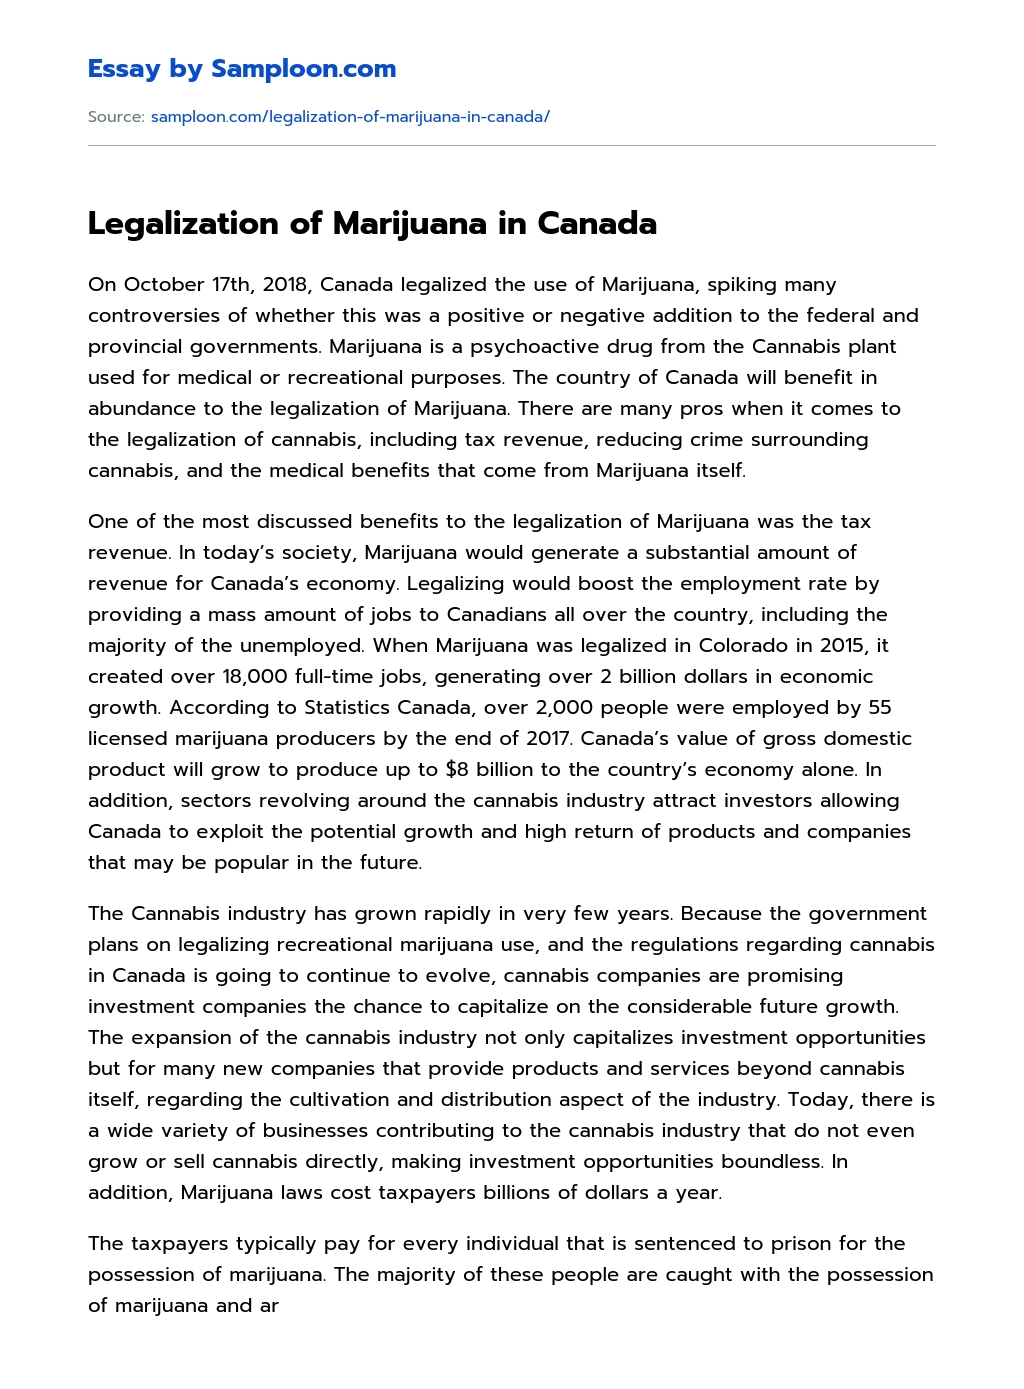 Legalization of Marijuana in Canada essay